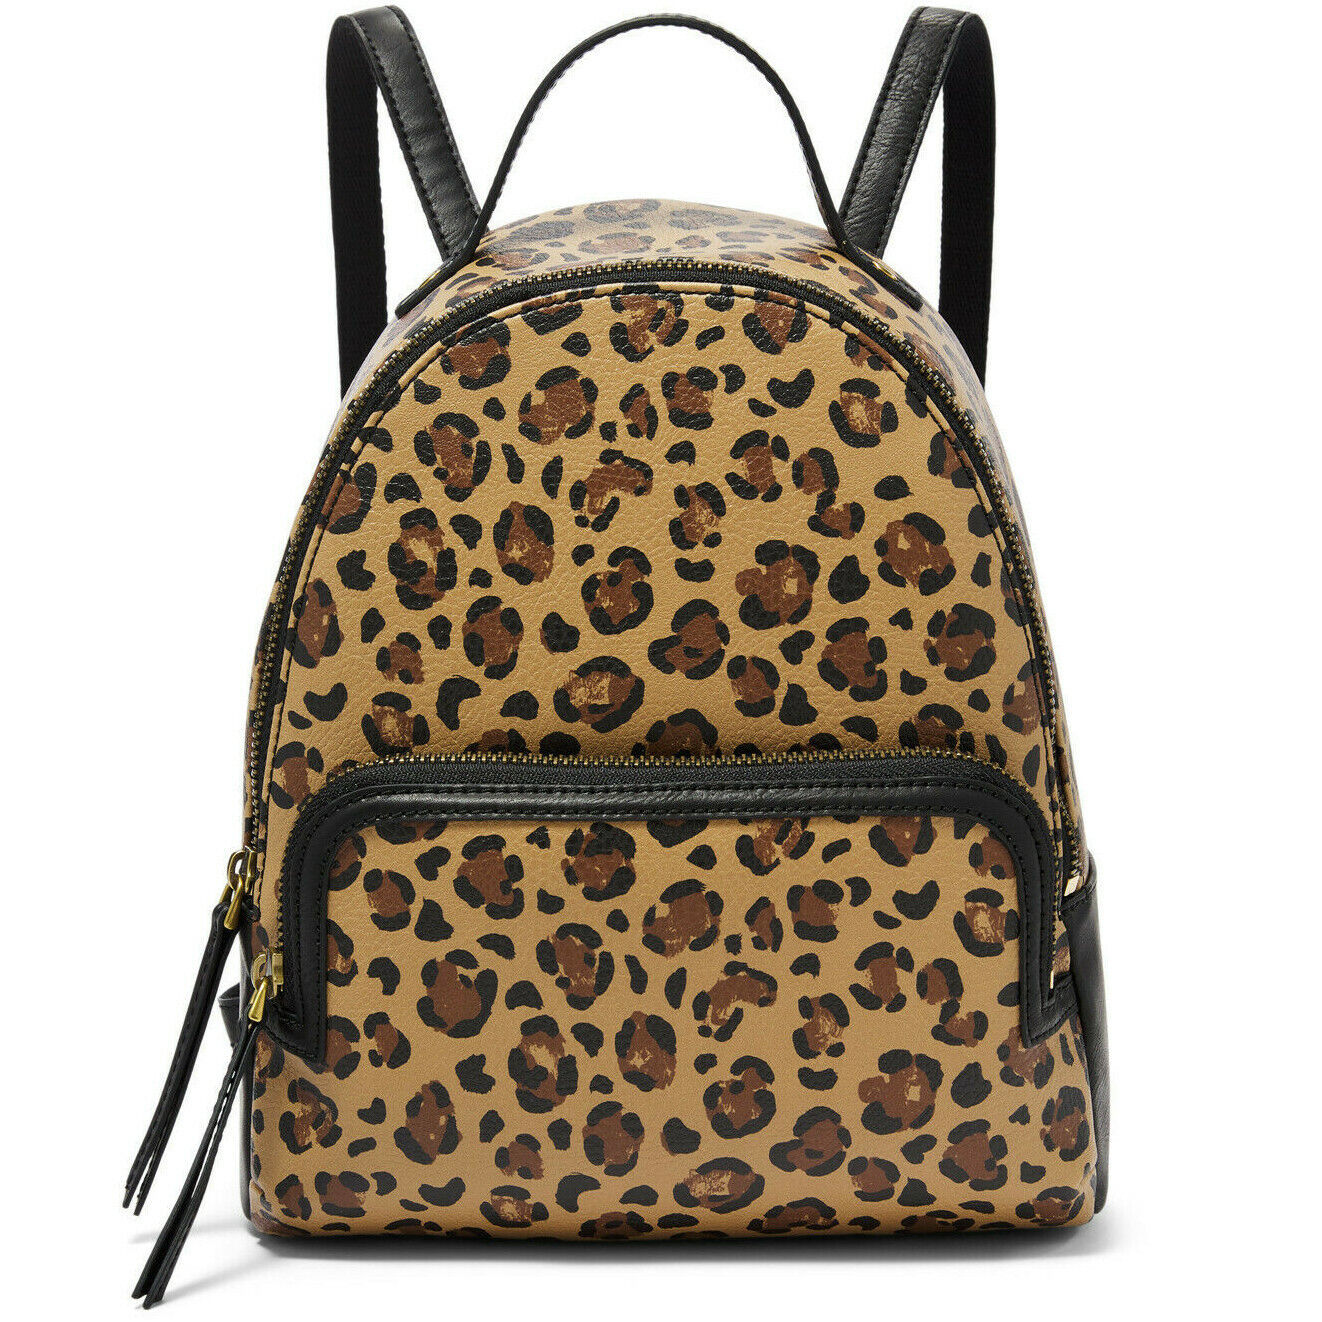 Fossil Felicity Backpack Cheetah SHB2347989 Leopard Animal Print Leopardo NWT